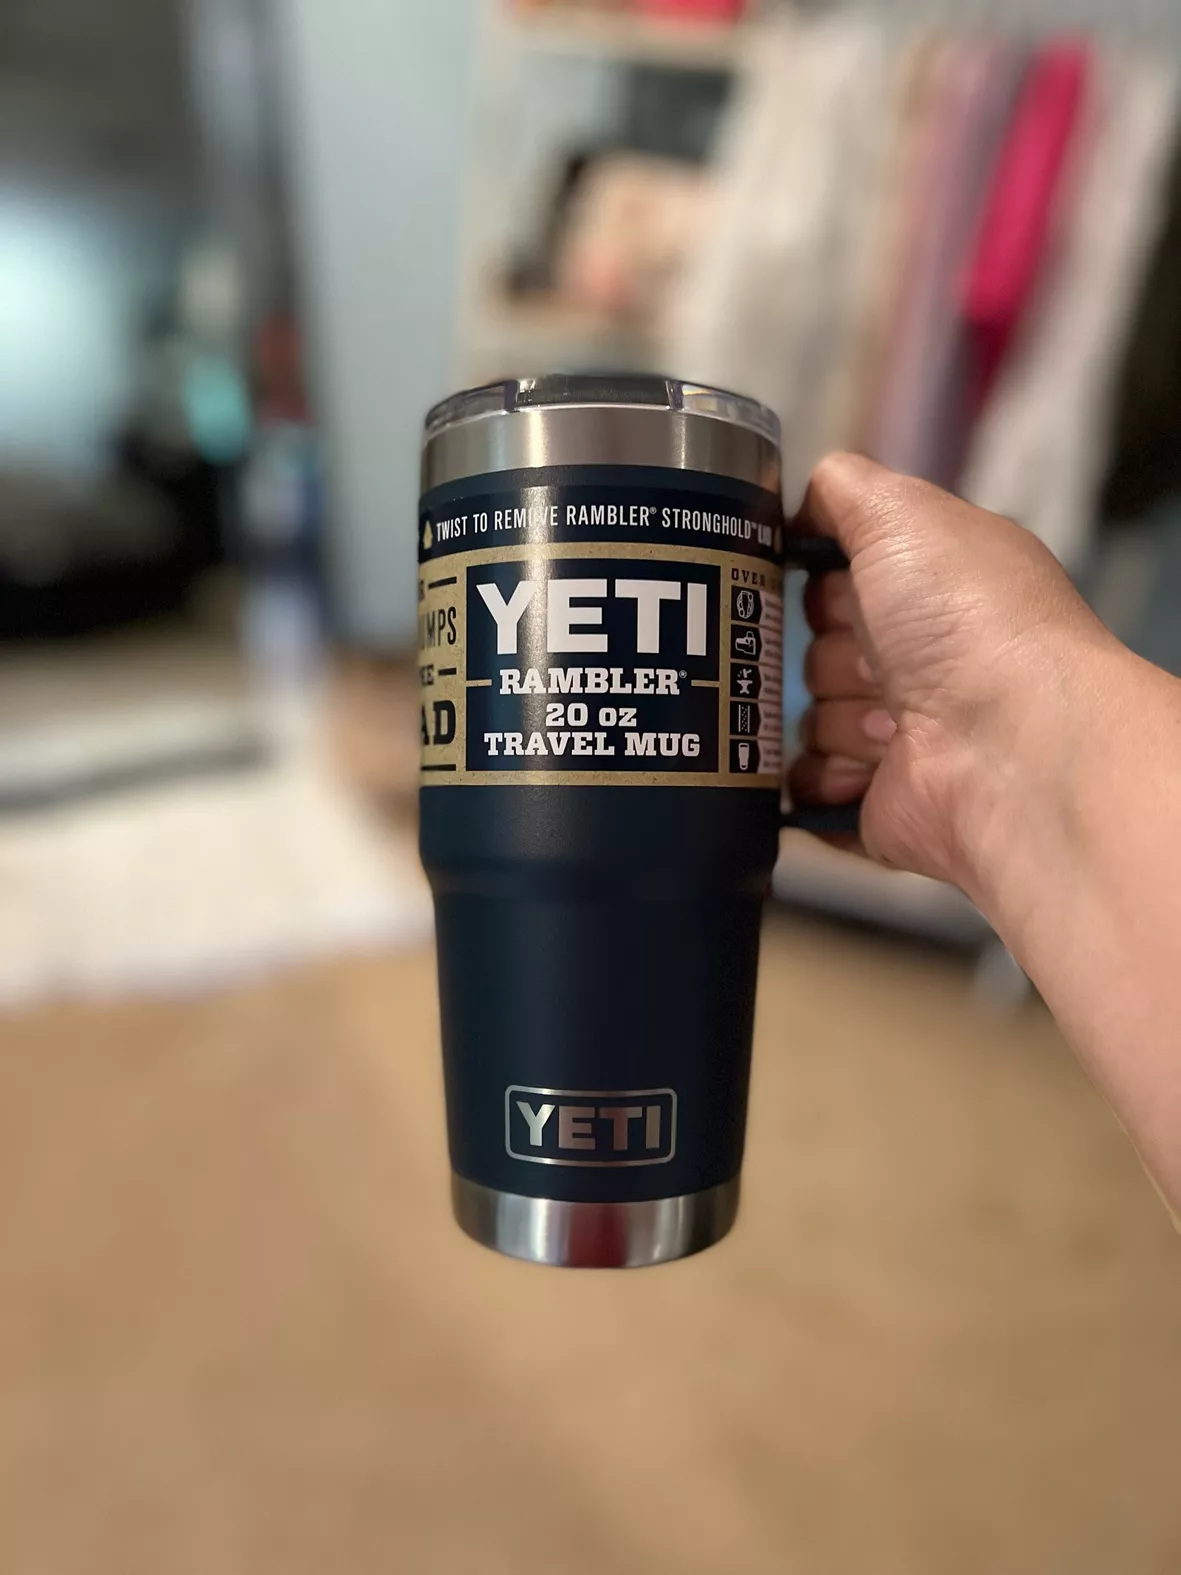 YETI - 20 oz Travel Mug